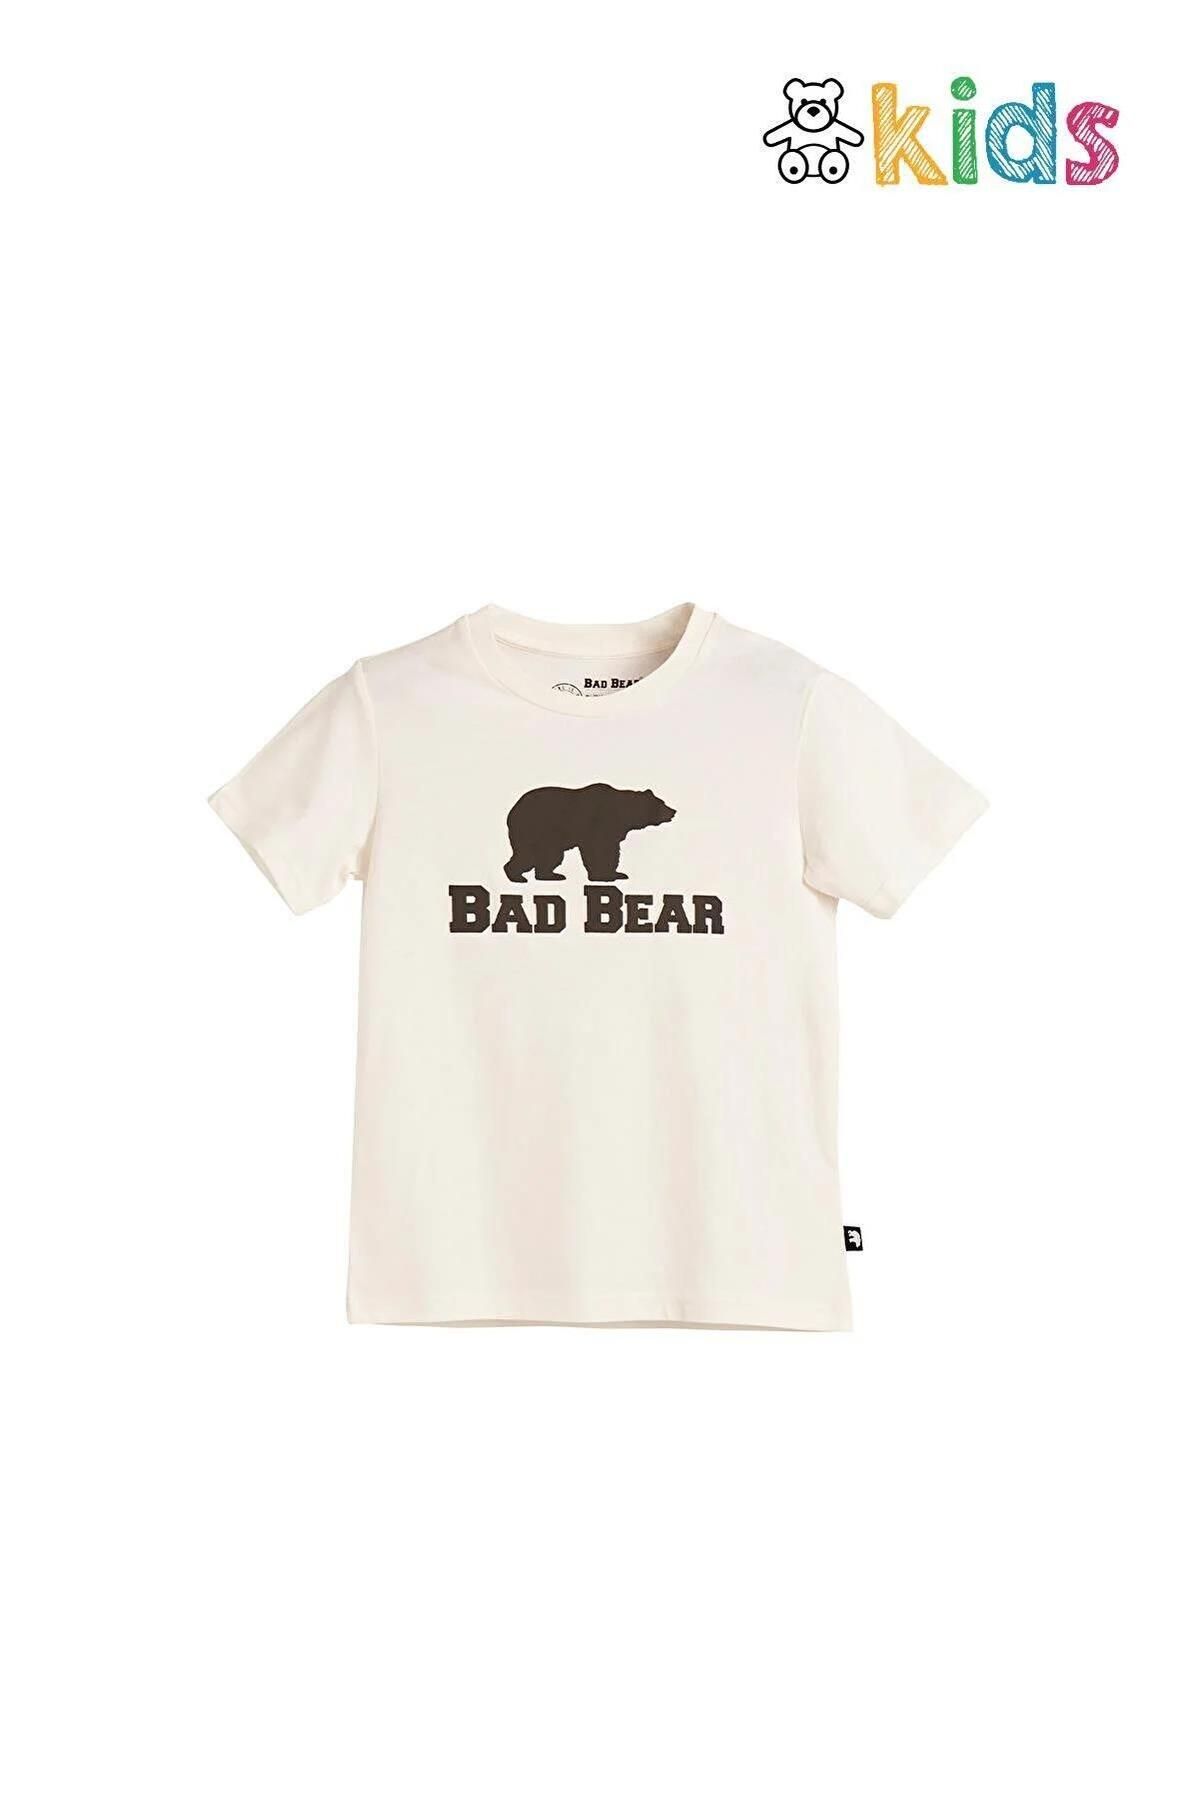 Bad Bear Bad BearBear Tee Kids Off-white Beyaz T-shirt Çocuk Tişört